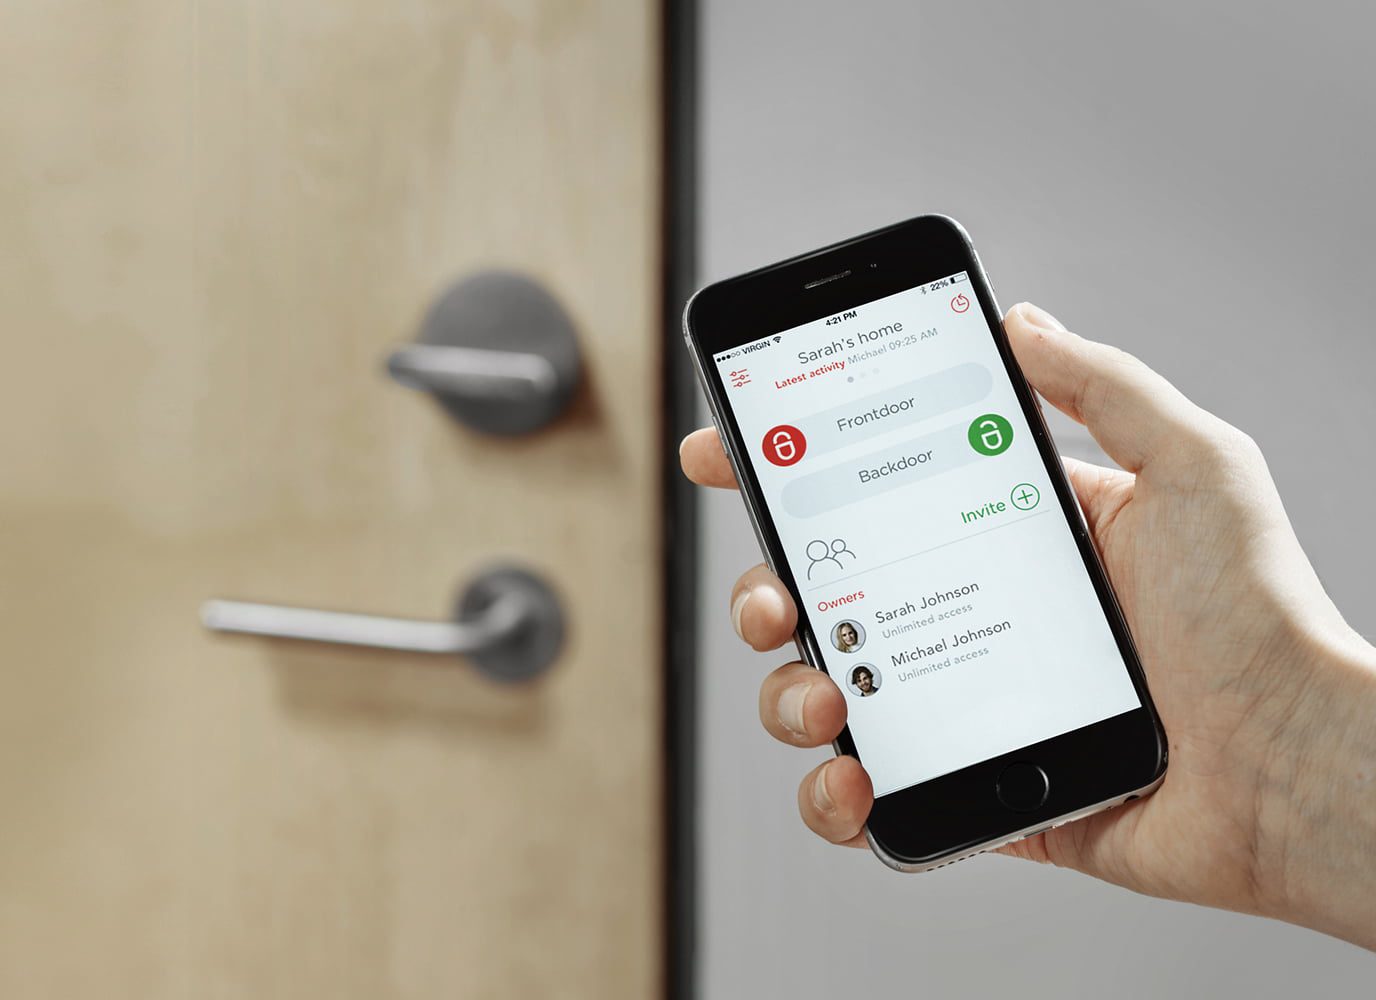 Friday Lock replaces keys by enabling user to unlock doors using a  smartphone - nordicsemi.com